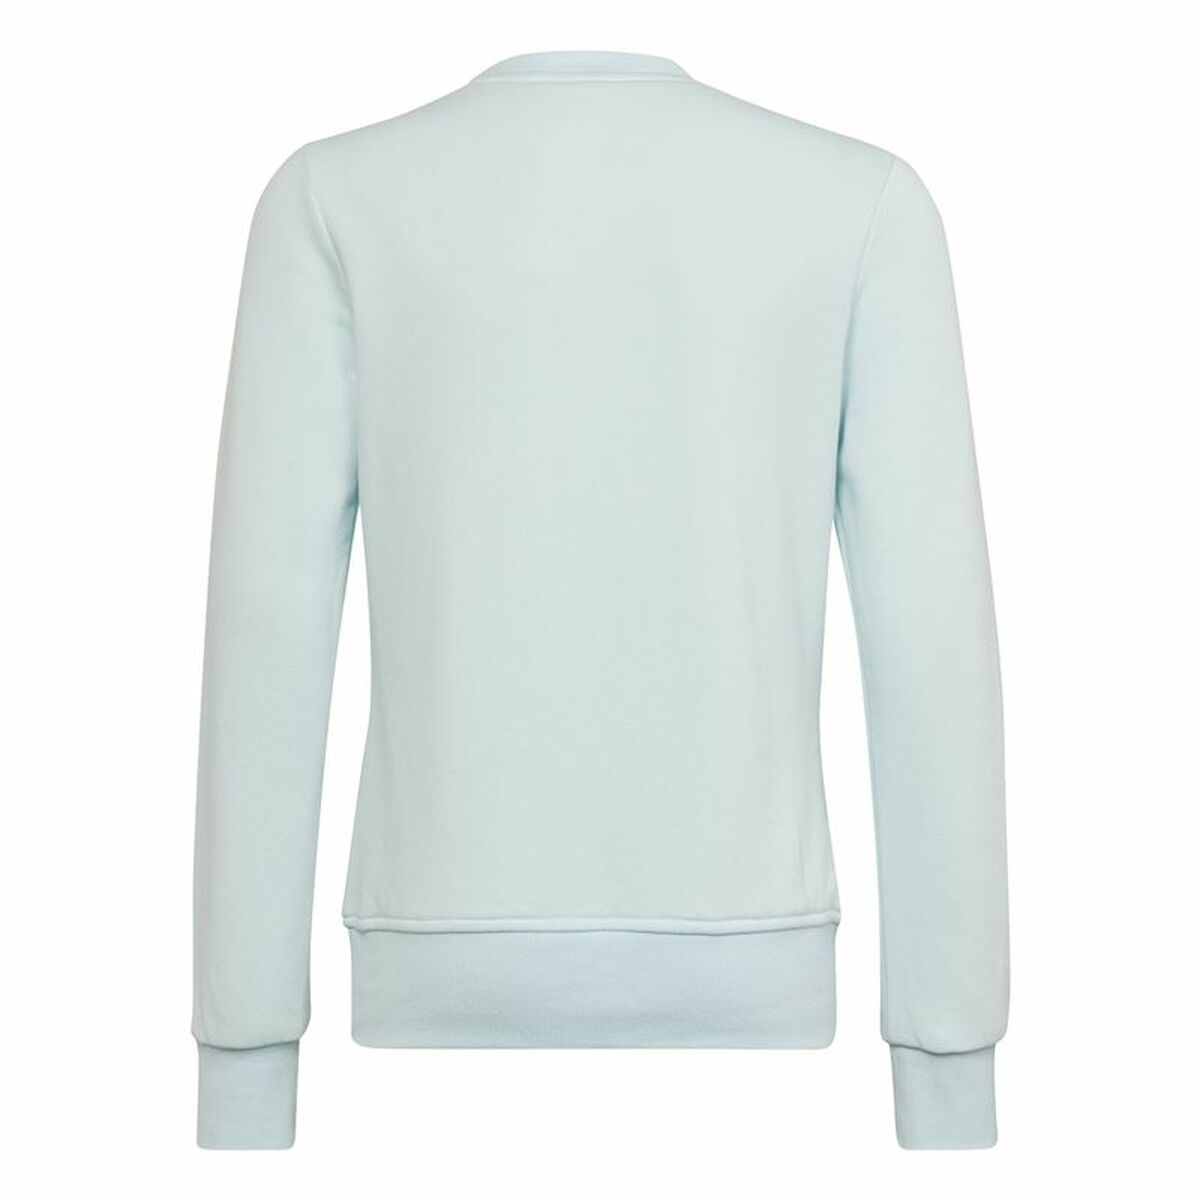 Hoodless Sweatshirt for Girls Adidas Essentials Cyan